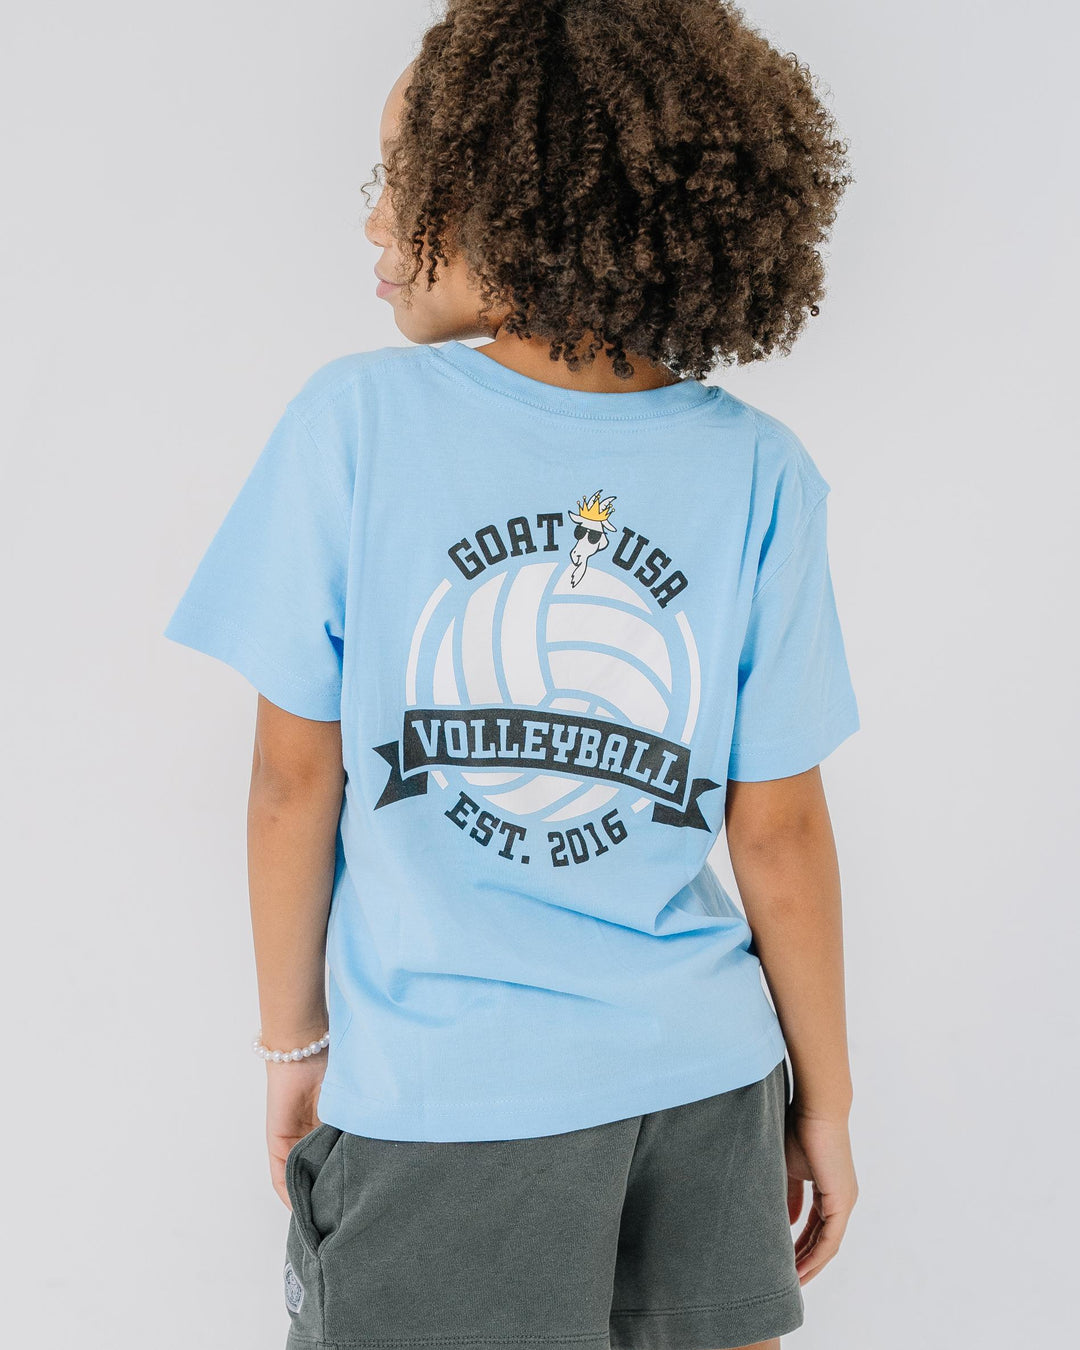 Girl wearing carolina blue Volleyball T-Shirt